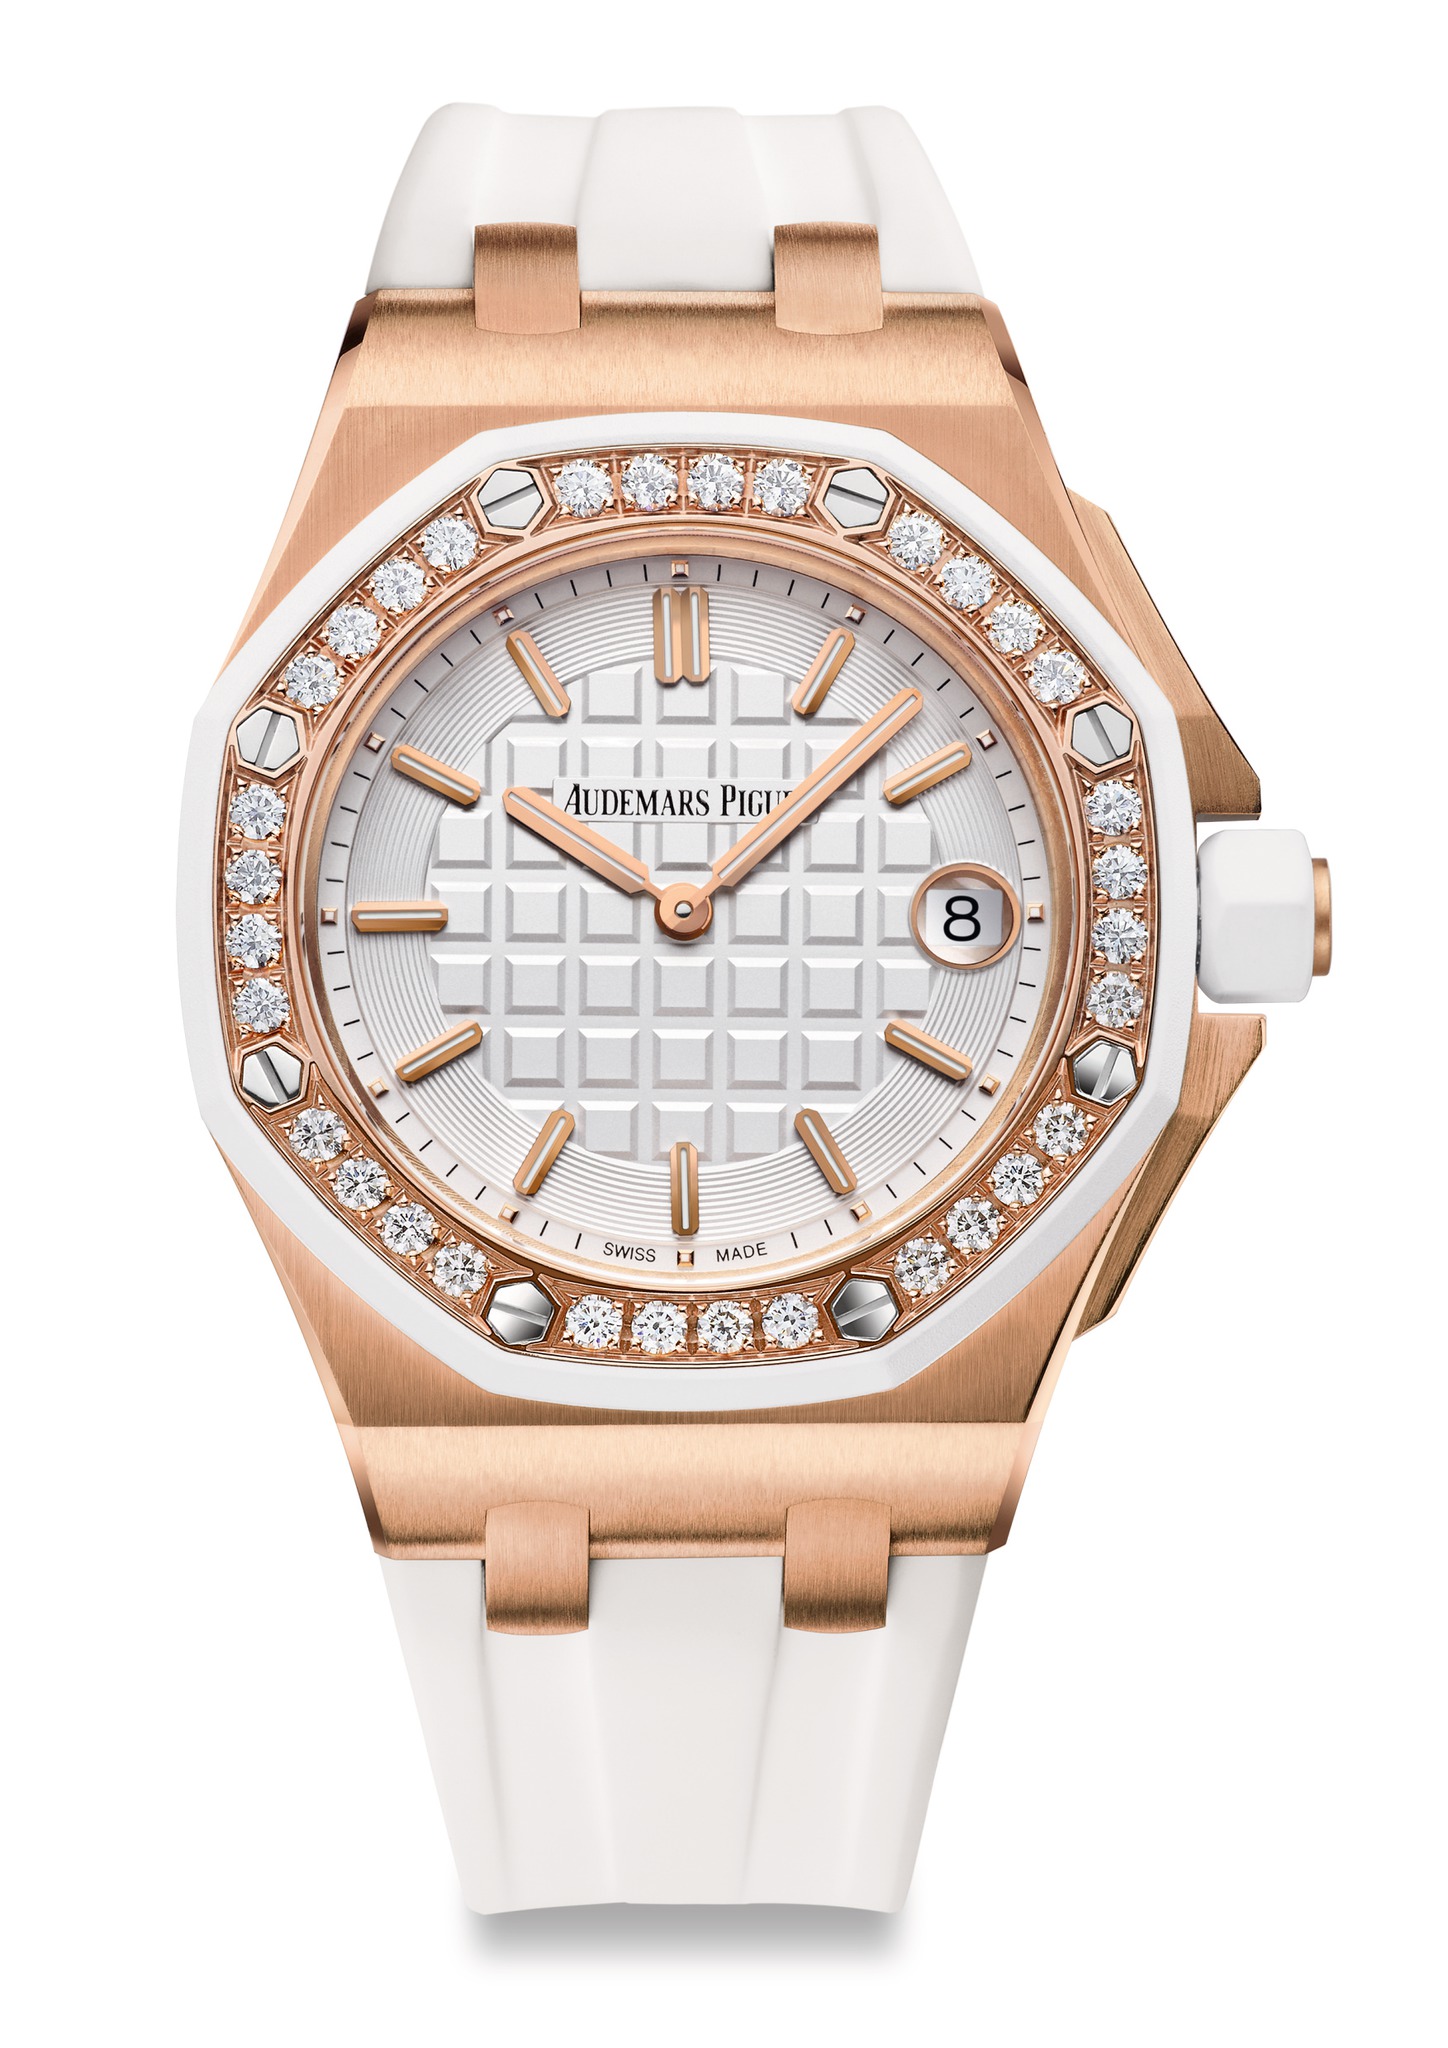 Audemars Piguet New Royal Oak Offshore Lady Diamonds Pink Gold watch REF: 67540OK.ZZ.D010CA.01 - Click Image to Close